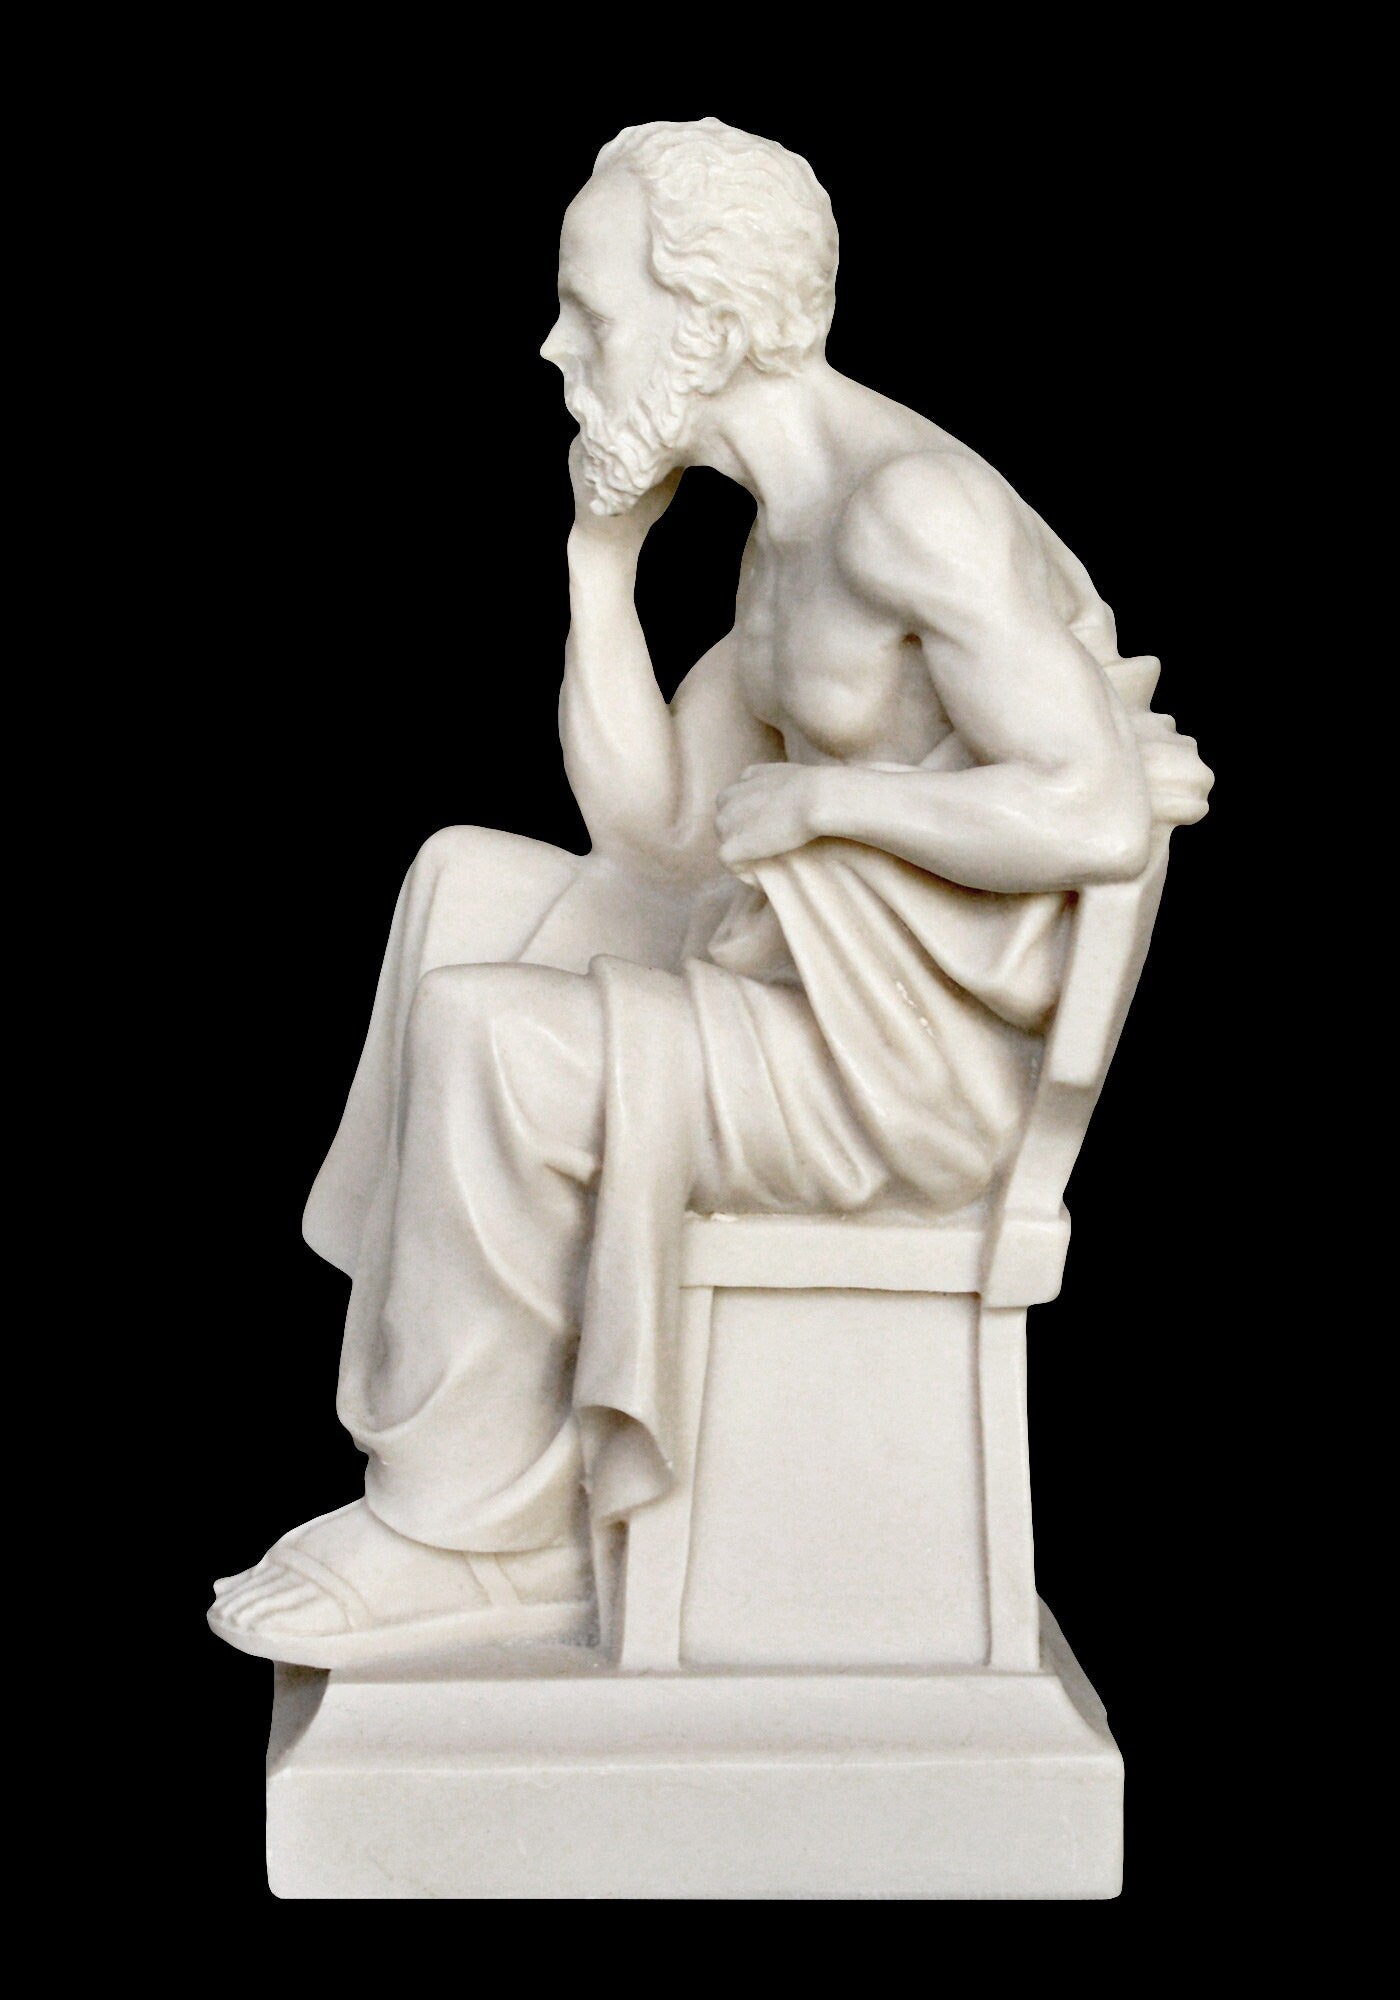 Socrates - Ancient Greek Philosopher - 470-399 BC - Teacher of Plato - Father of Western Philosophy - Alabaster sculpture